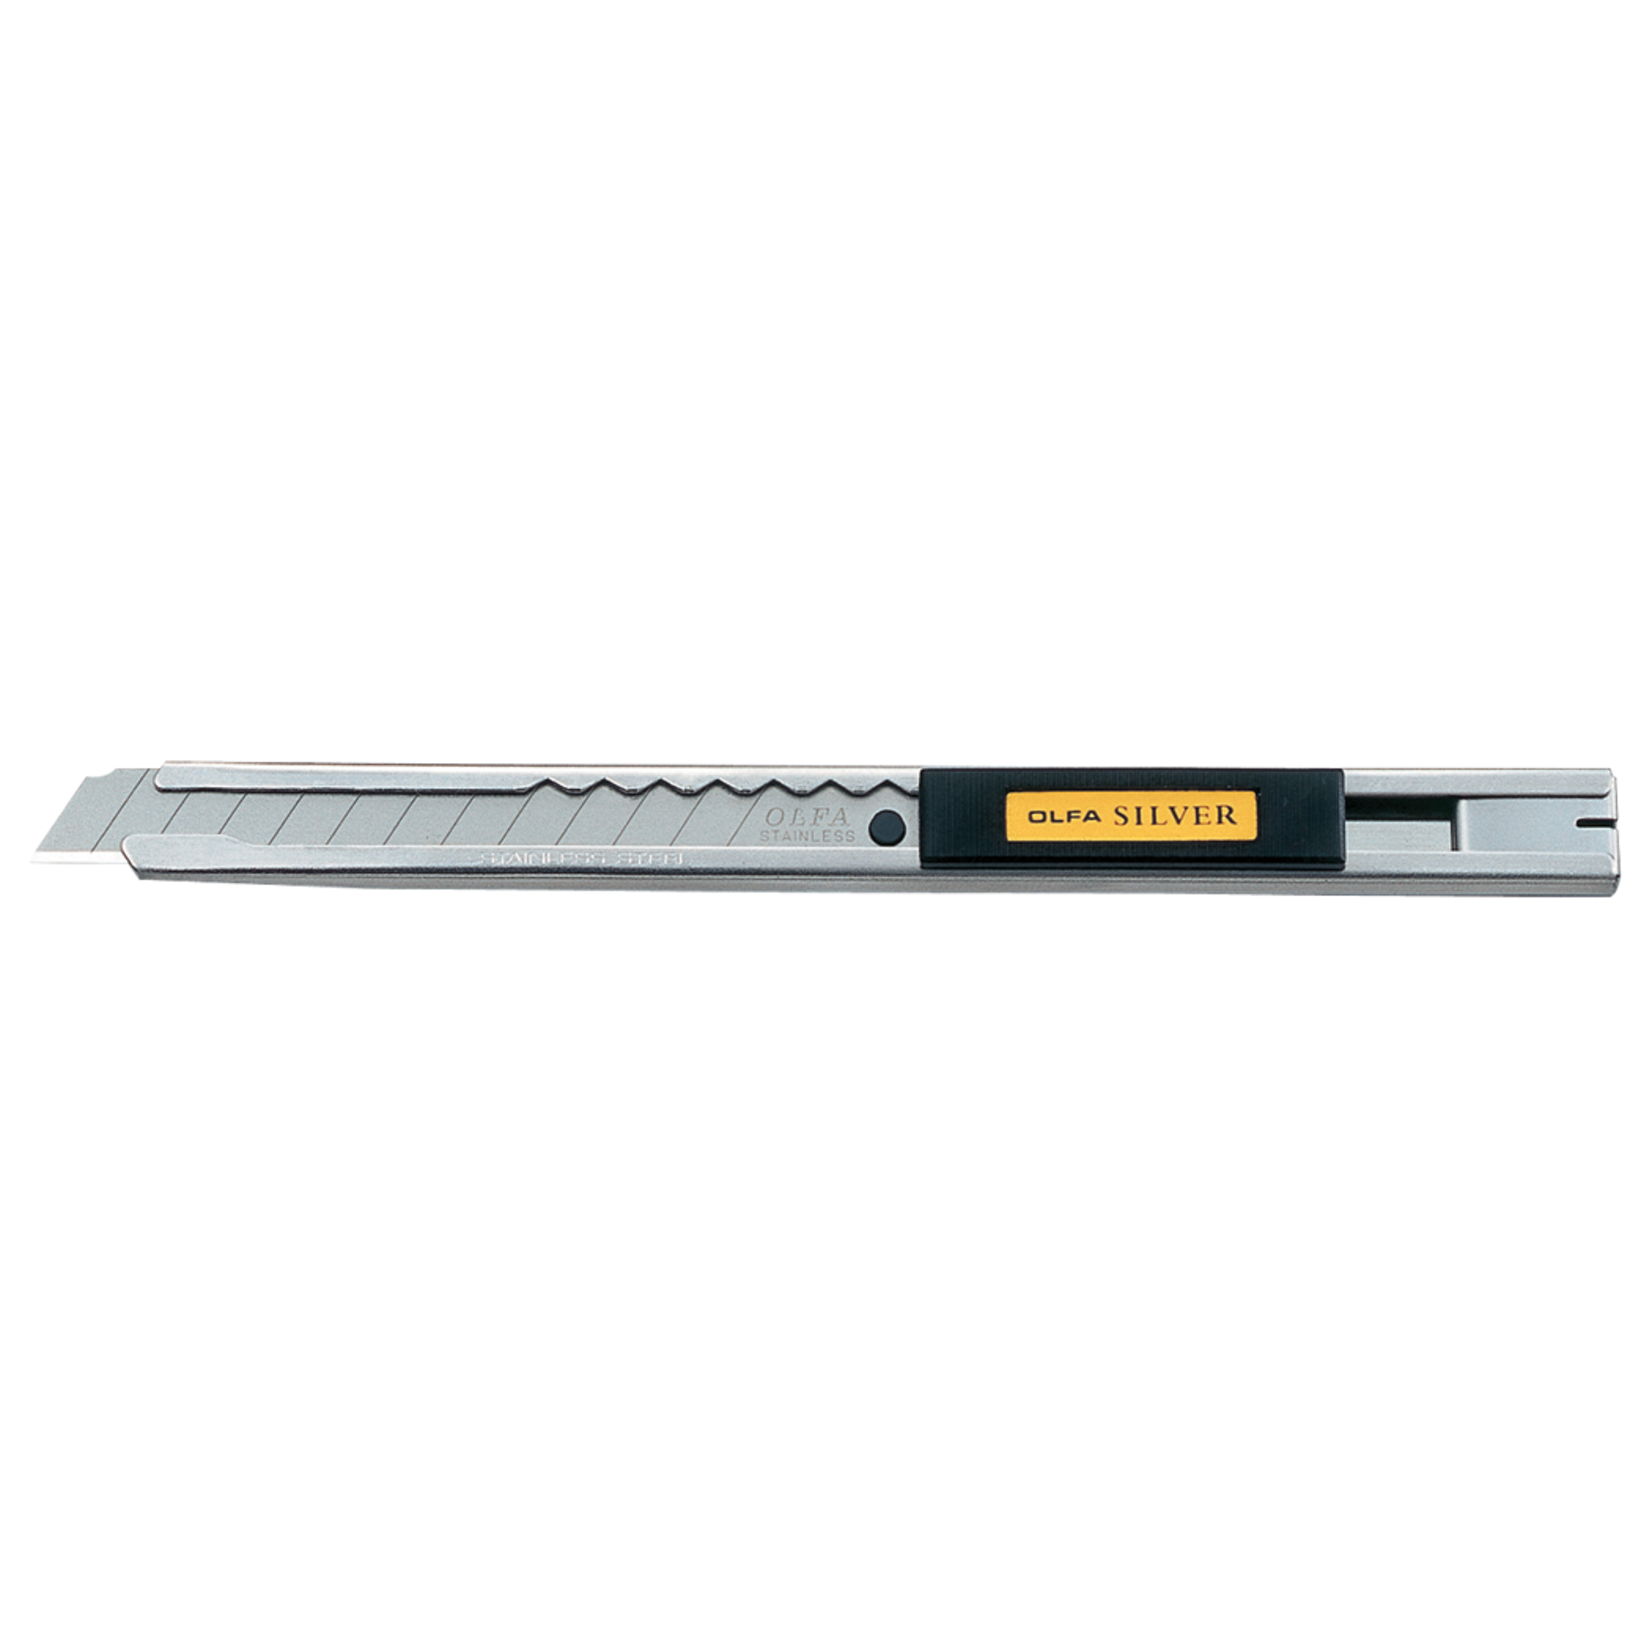 Olfa Olfa Stainless Steel Slide-Lock Knife With Snap Off Blades